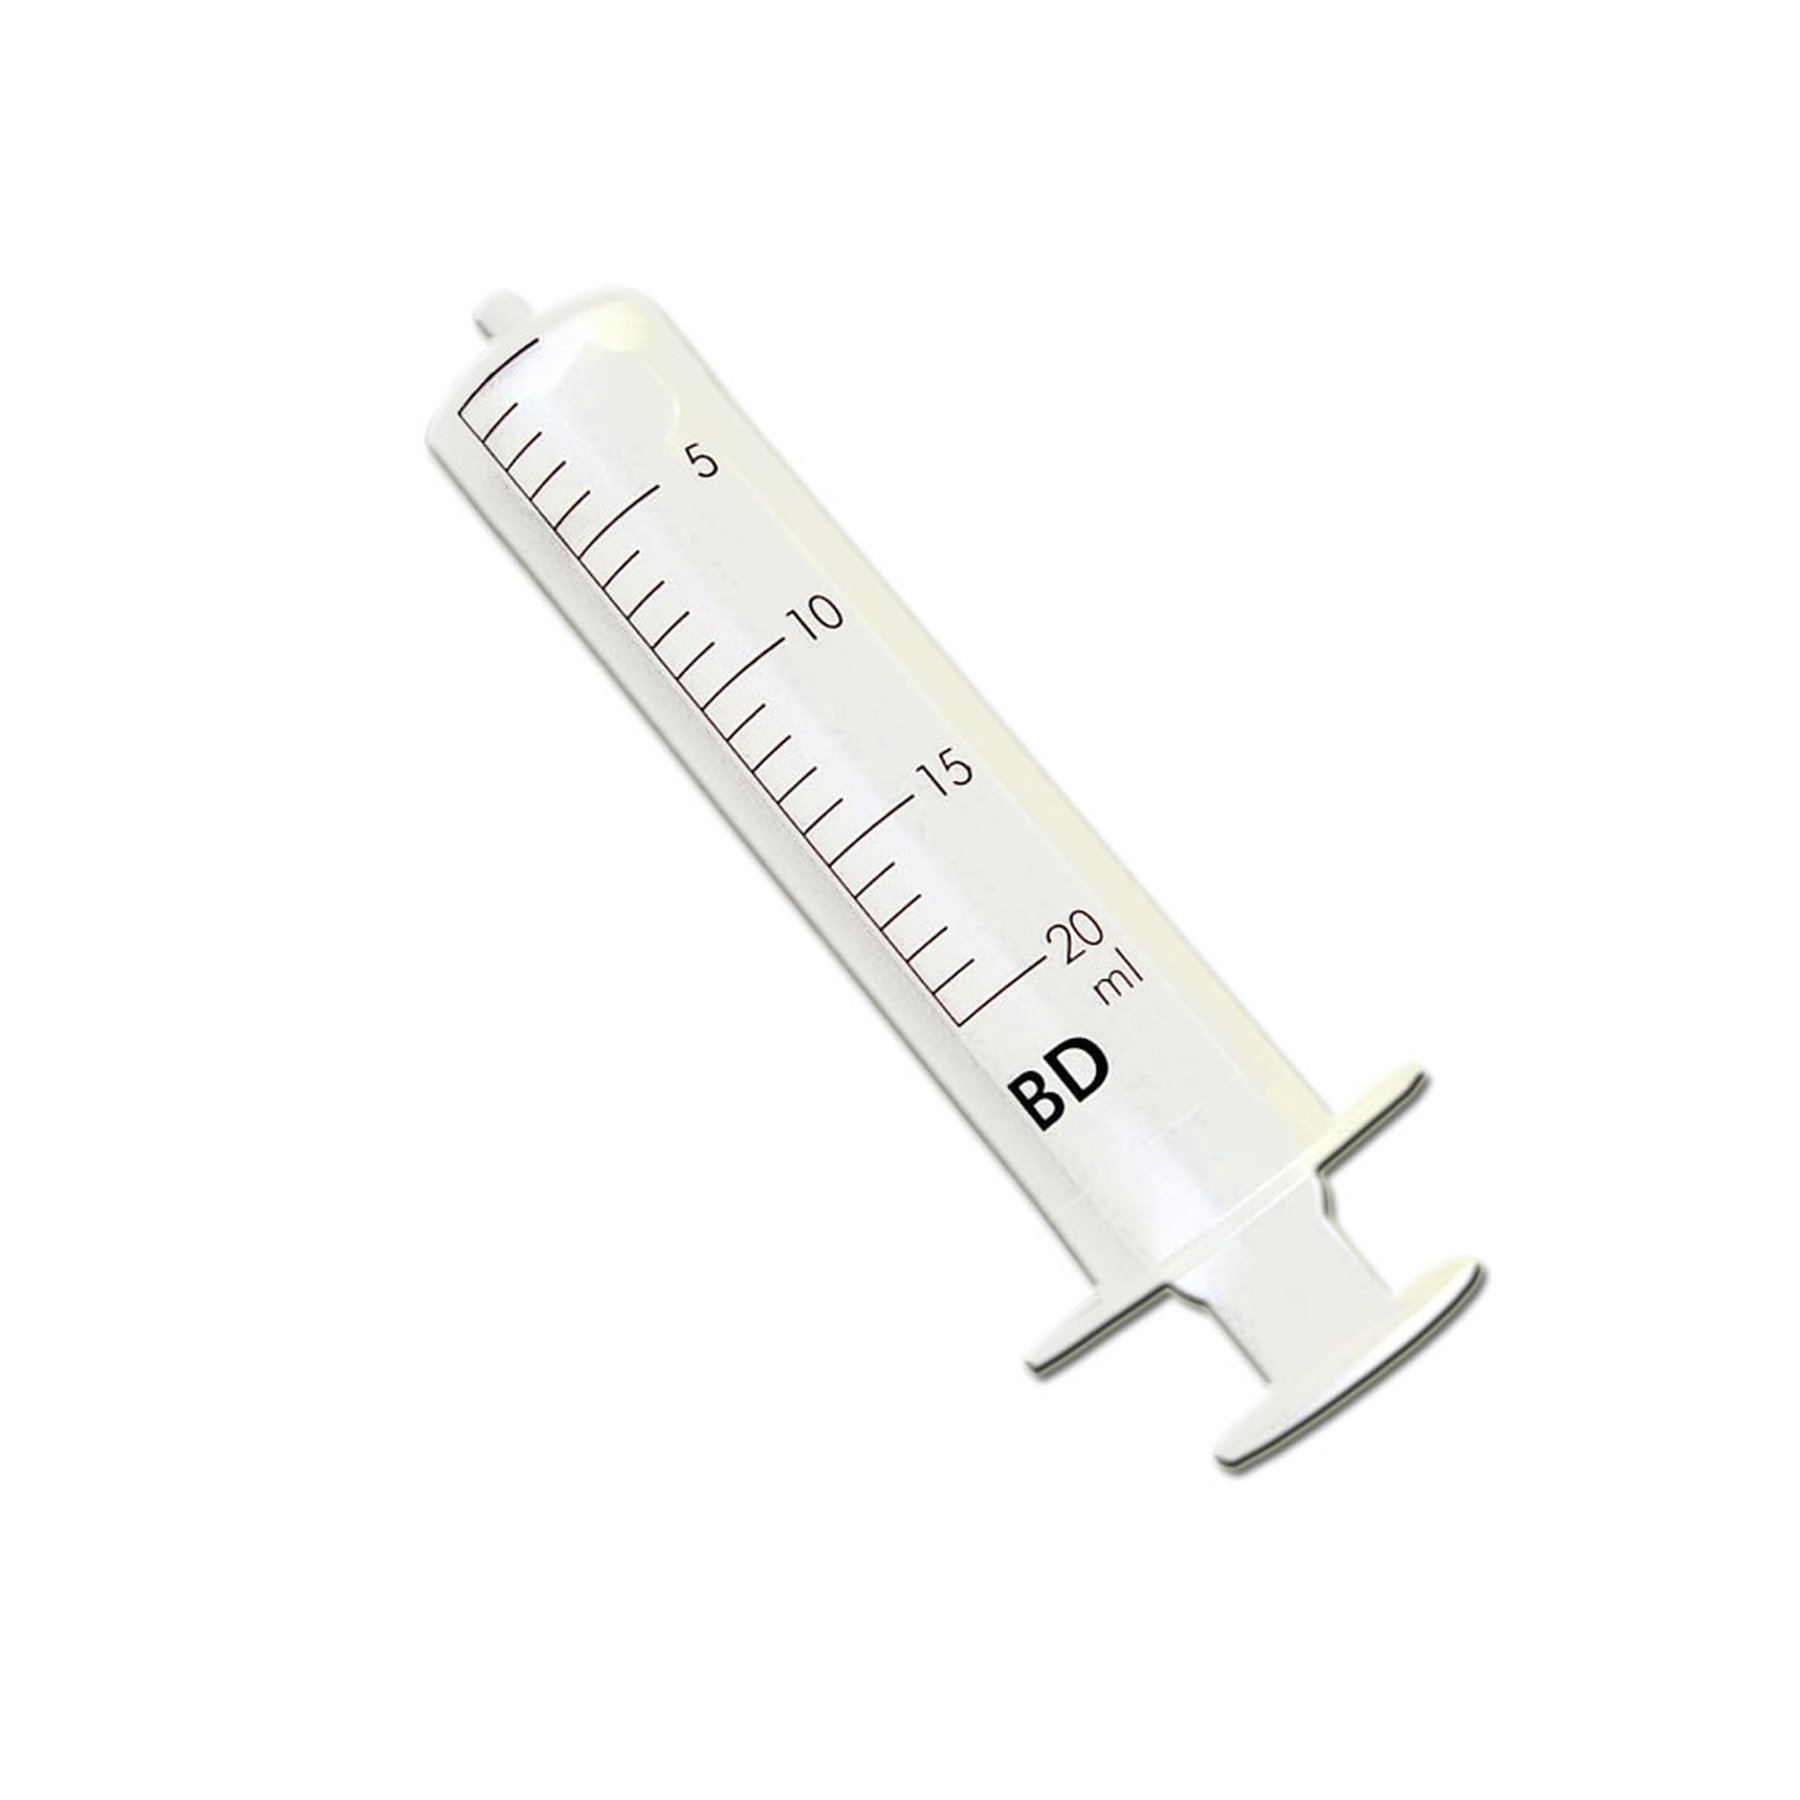 BD Discardit II disposable syringes, 2-part 20 ml